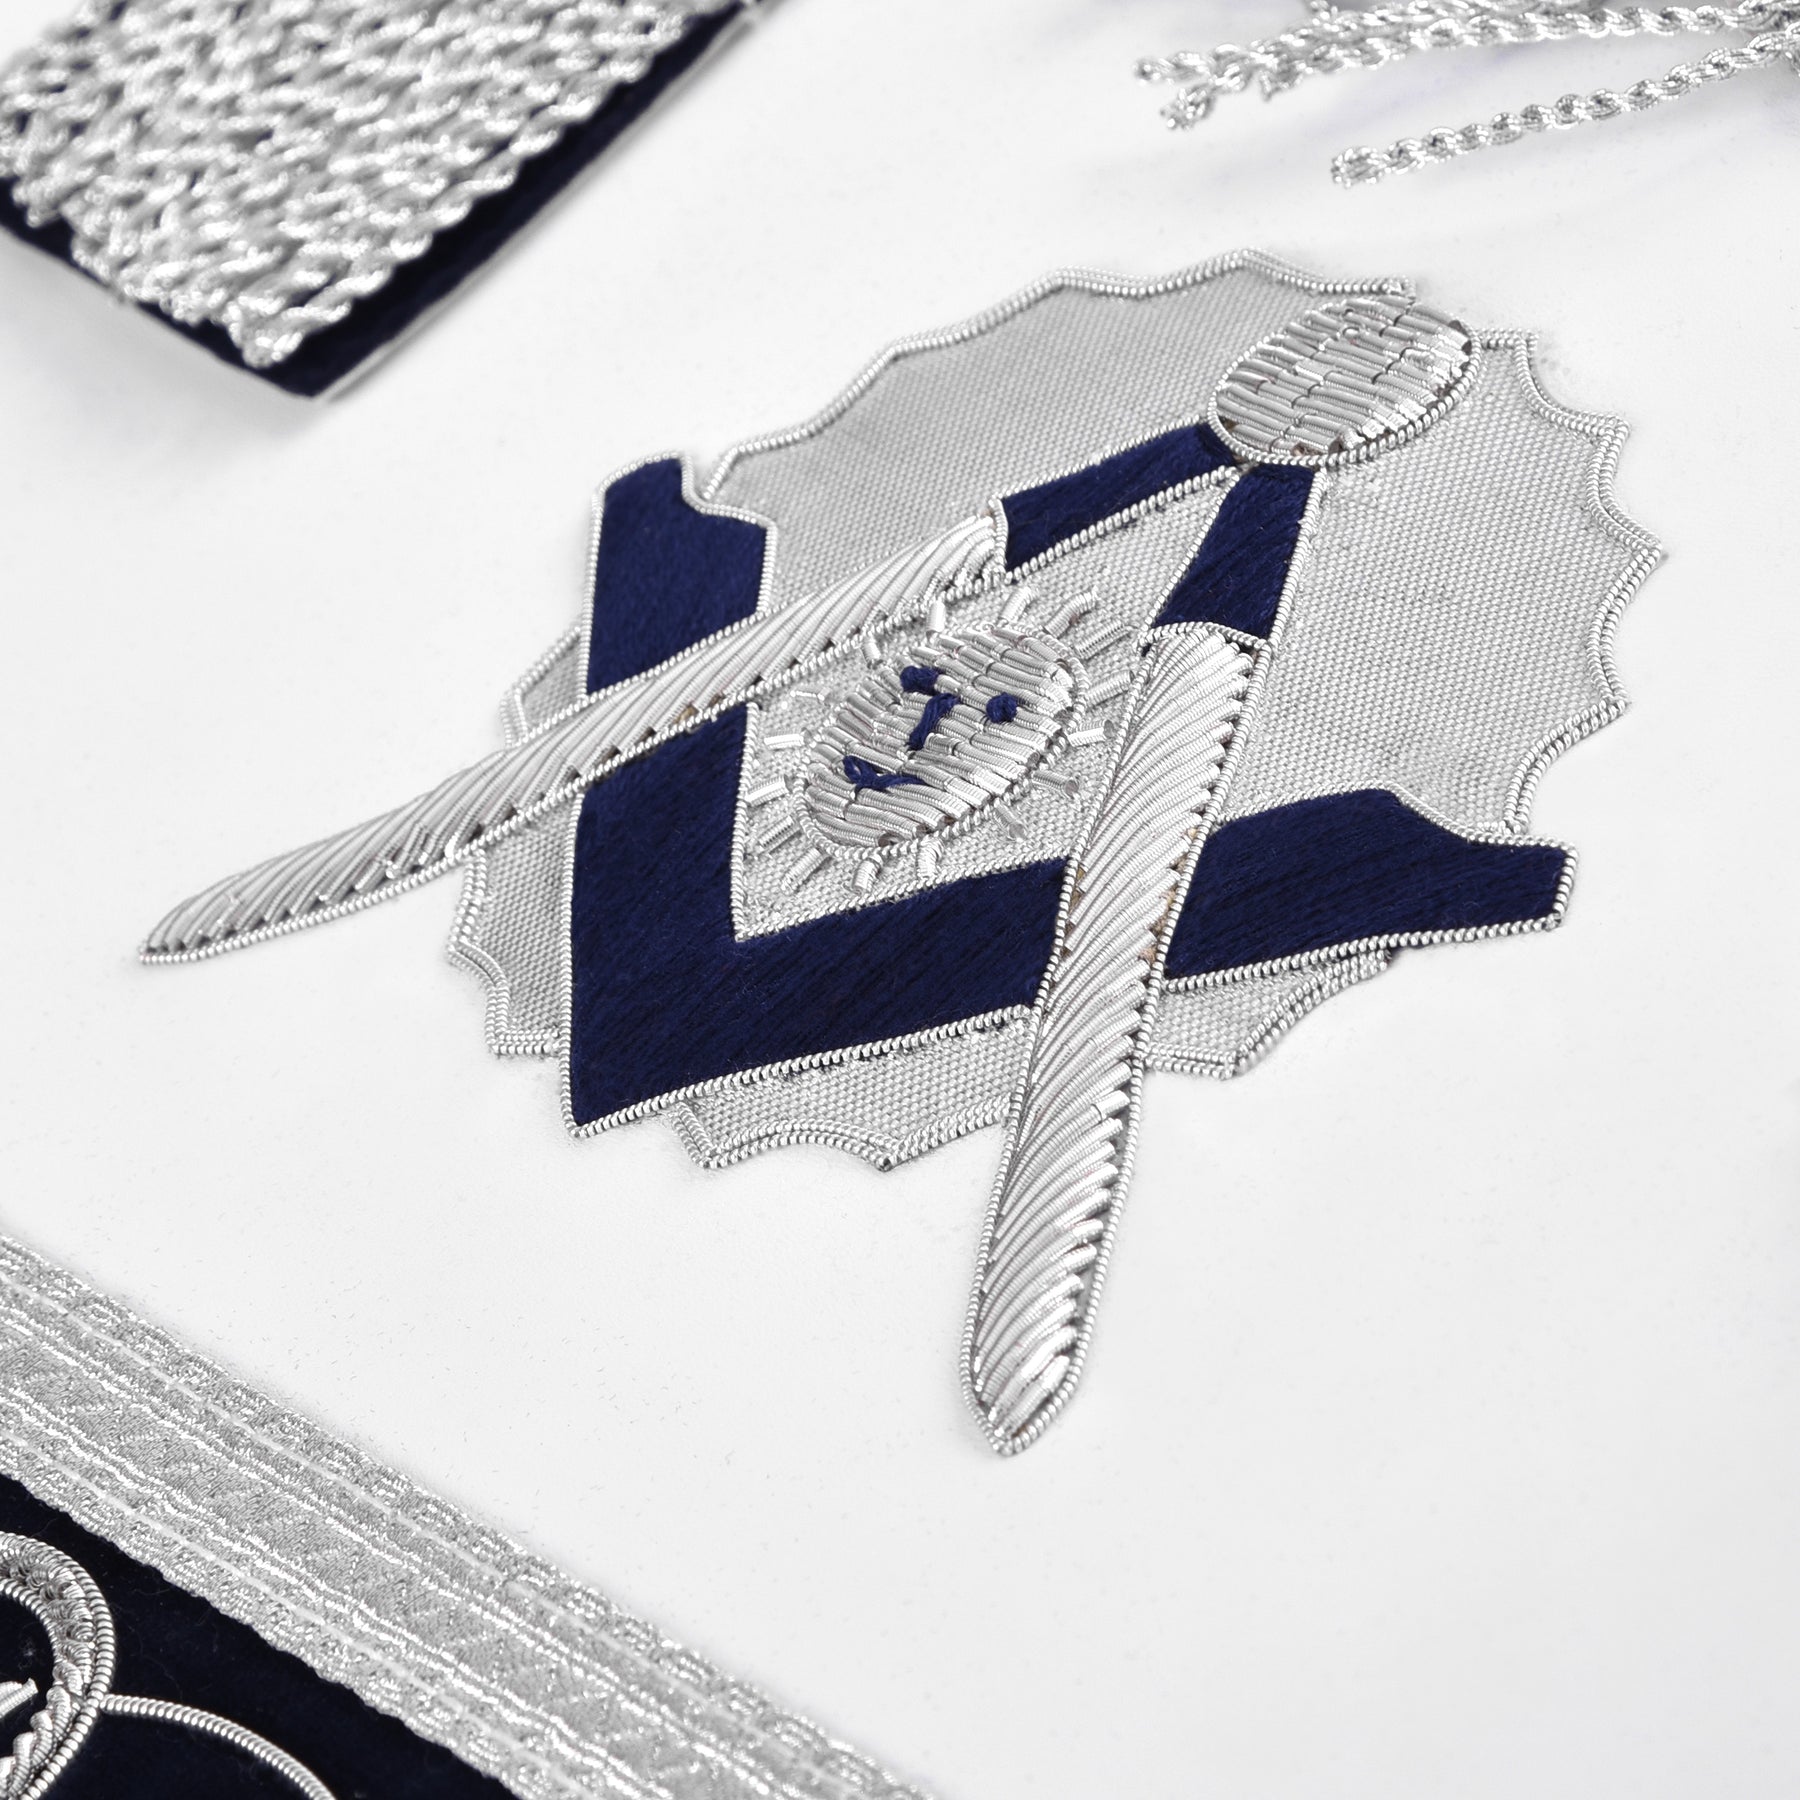 Senior Deacon Blue Lodge California Officer Apron - Dark Blue With Silver Hand Embroidery Bullion